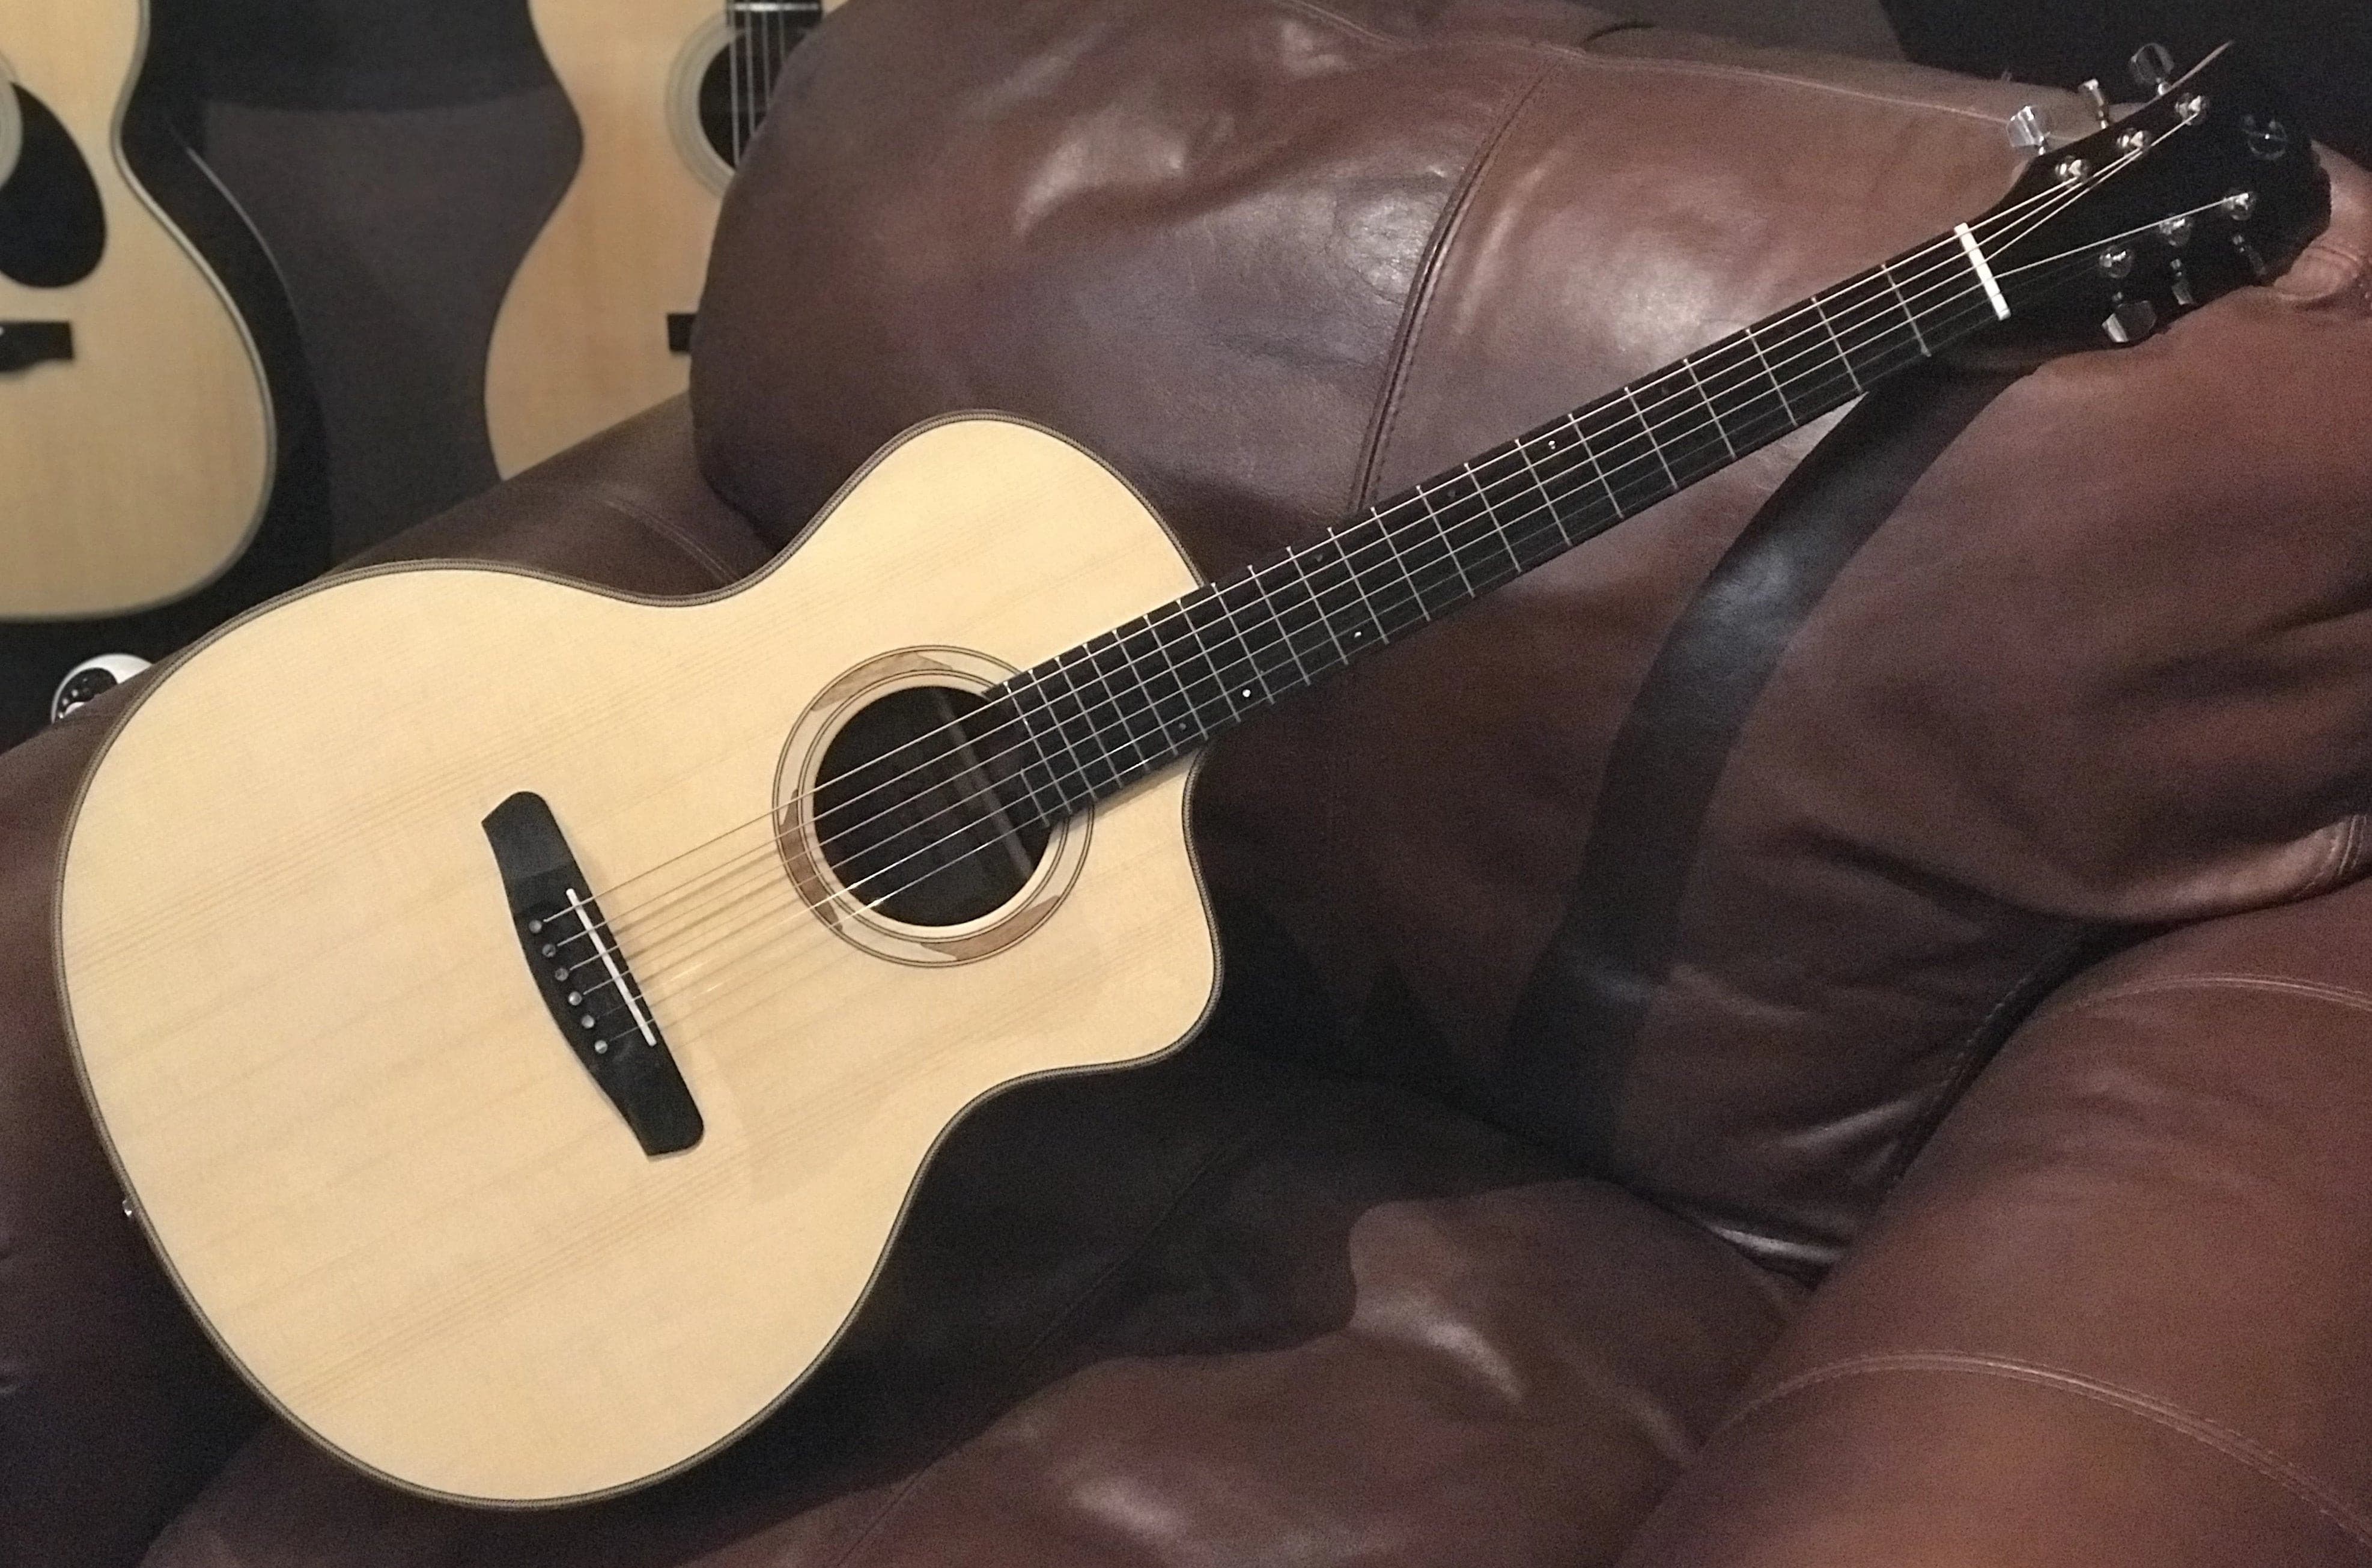 Dowina Mahogany (Pomona) GAC SWS, Acoustic Guitar for sale at Richards Guitars.